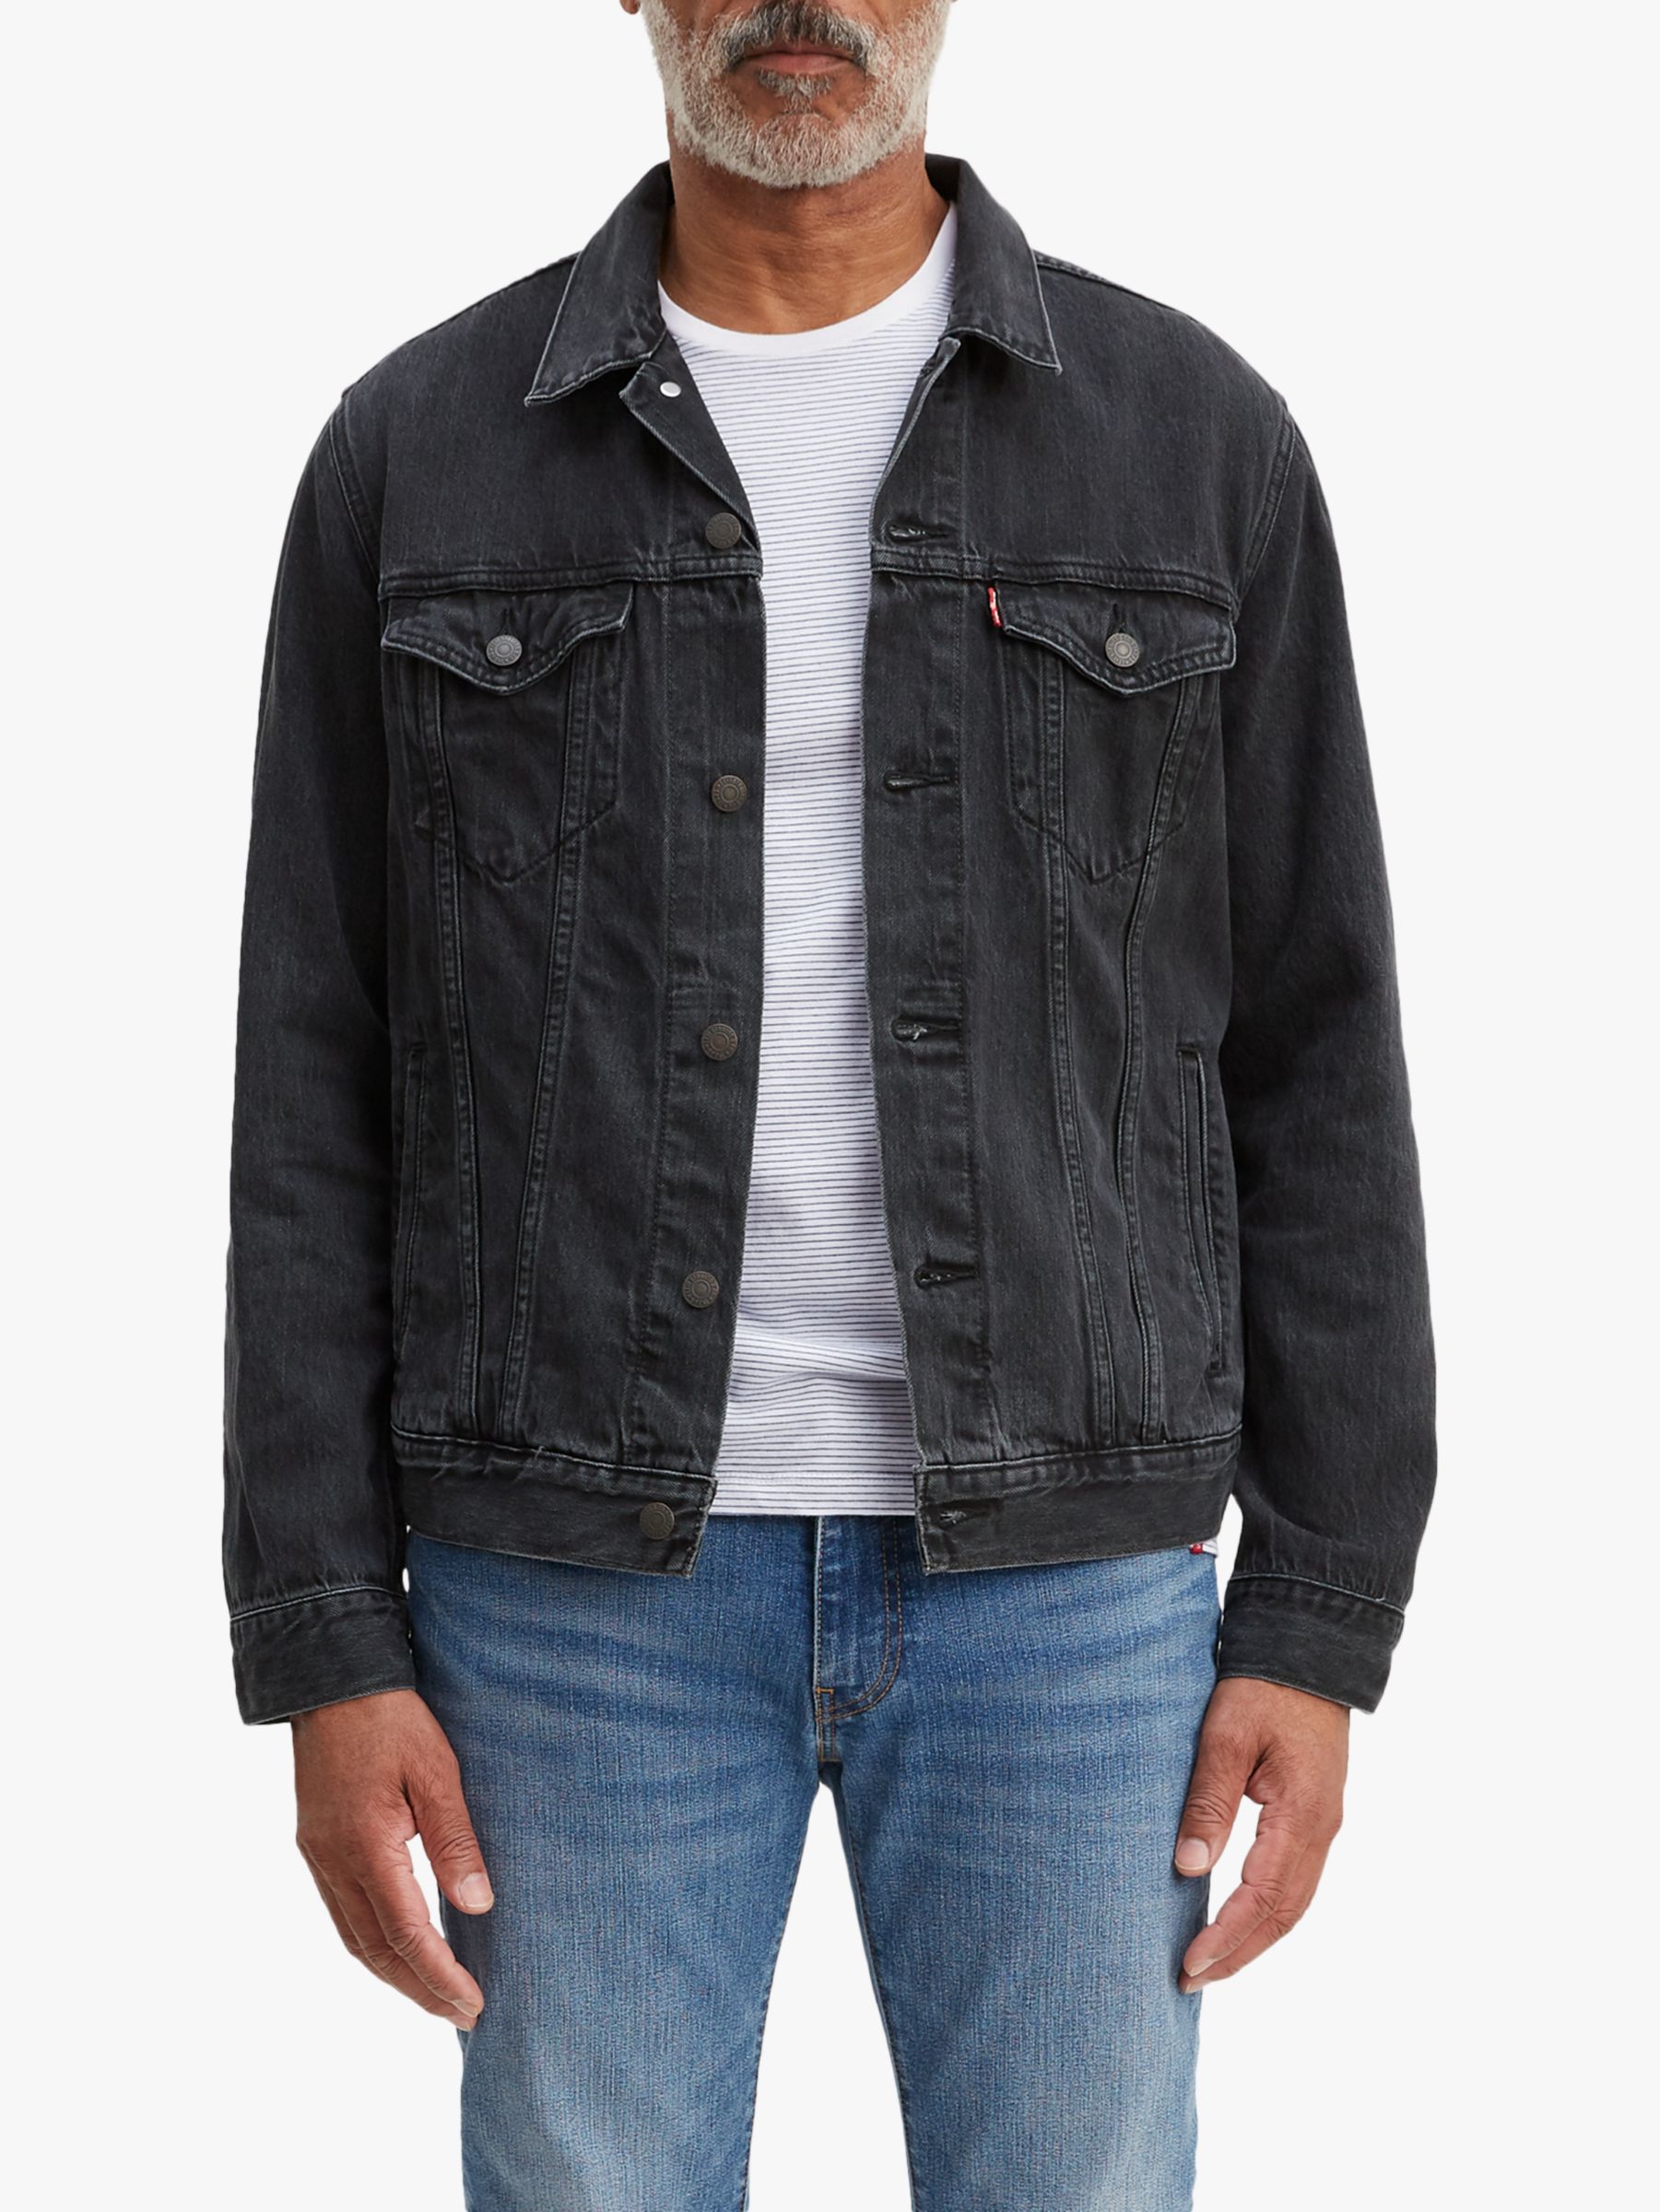 levi's trucker jeans jacket